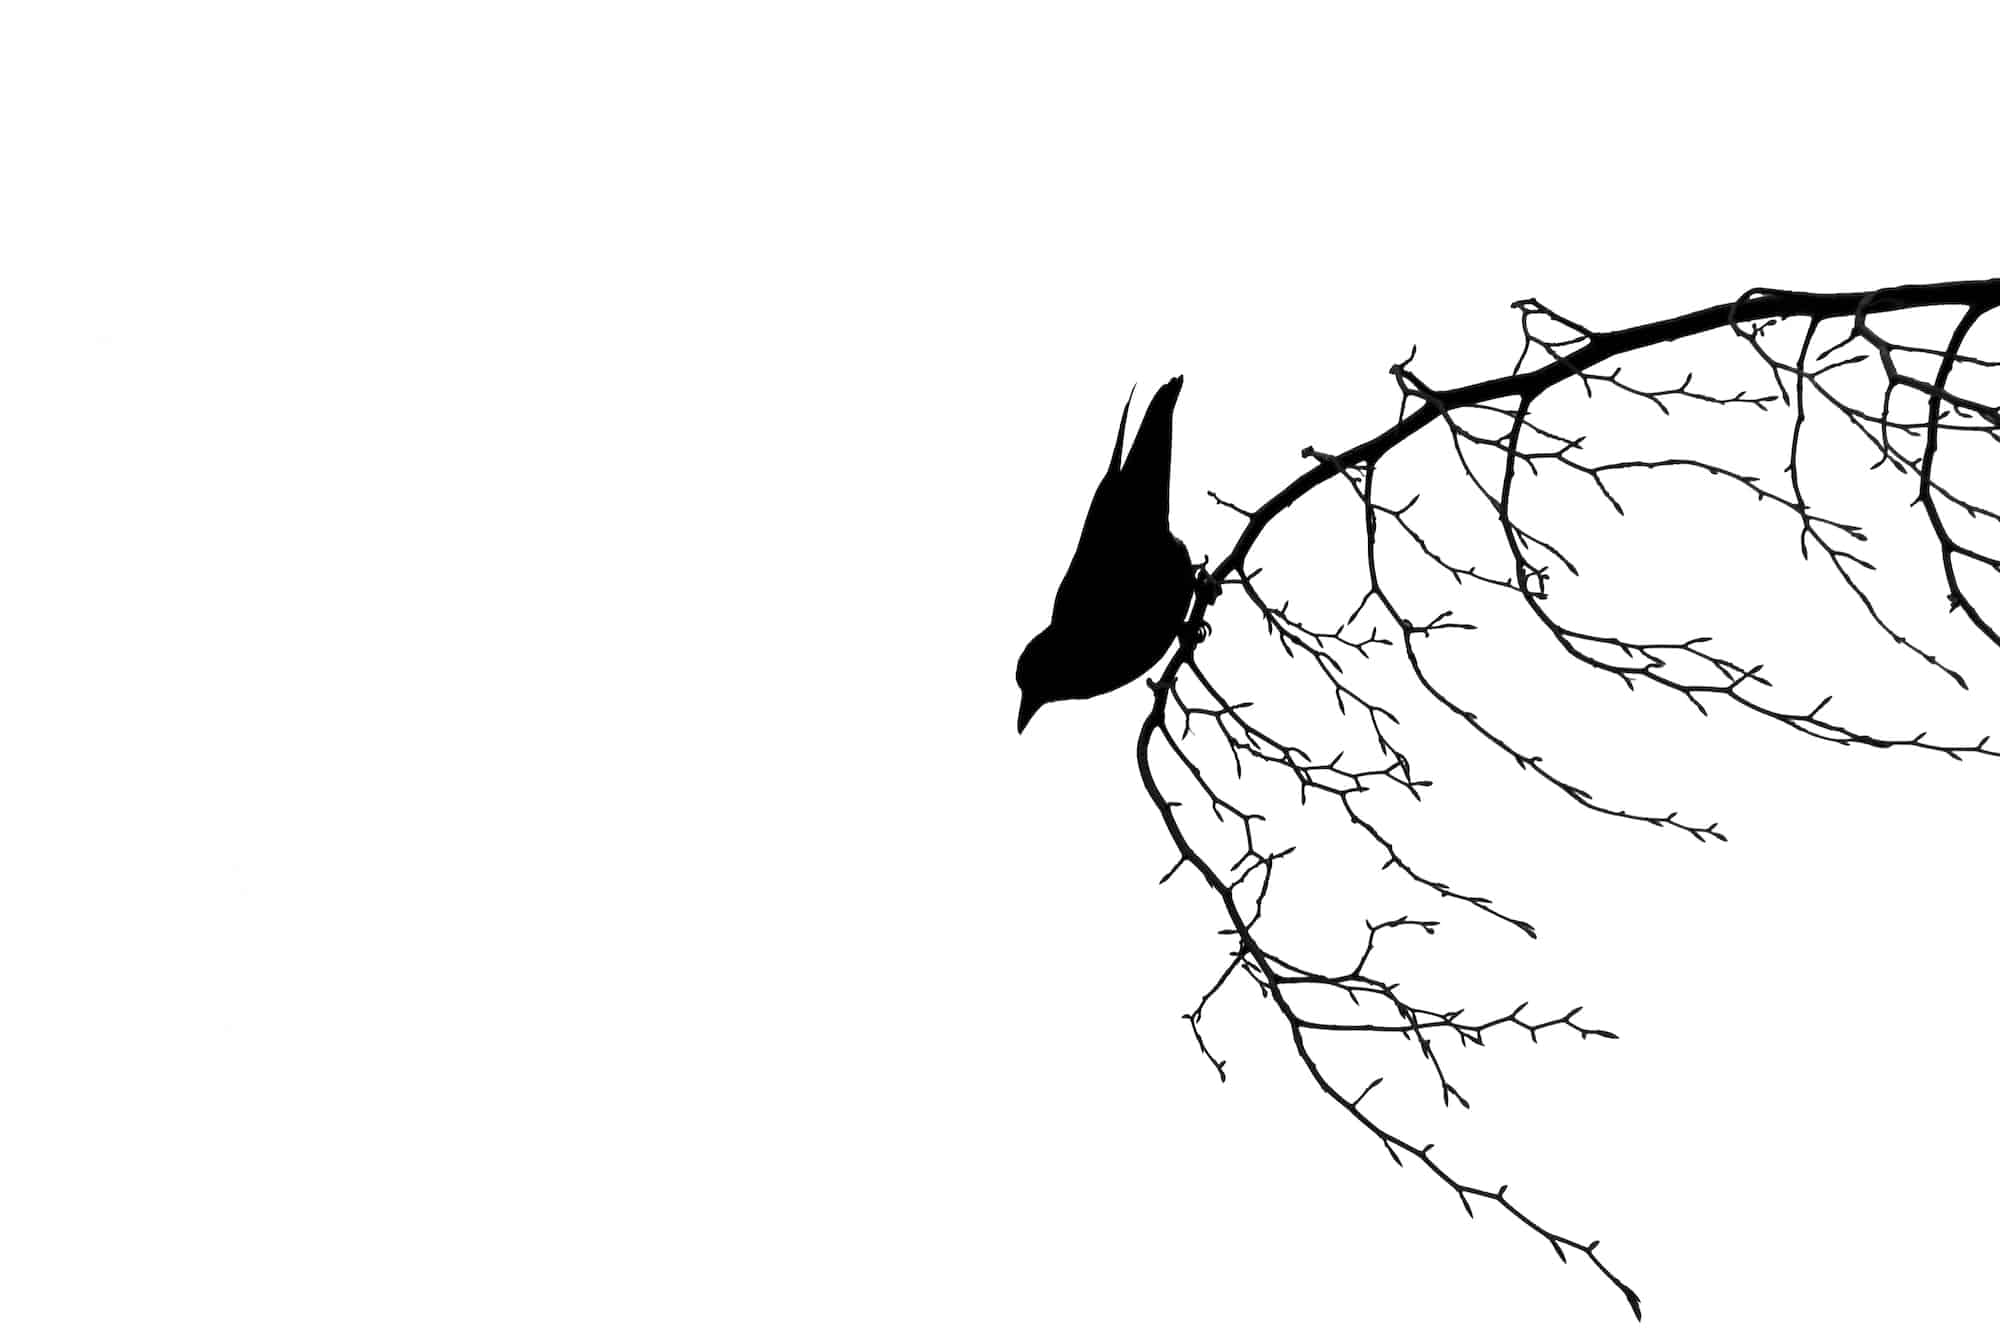 Perching Crow